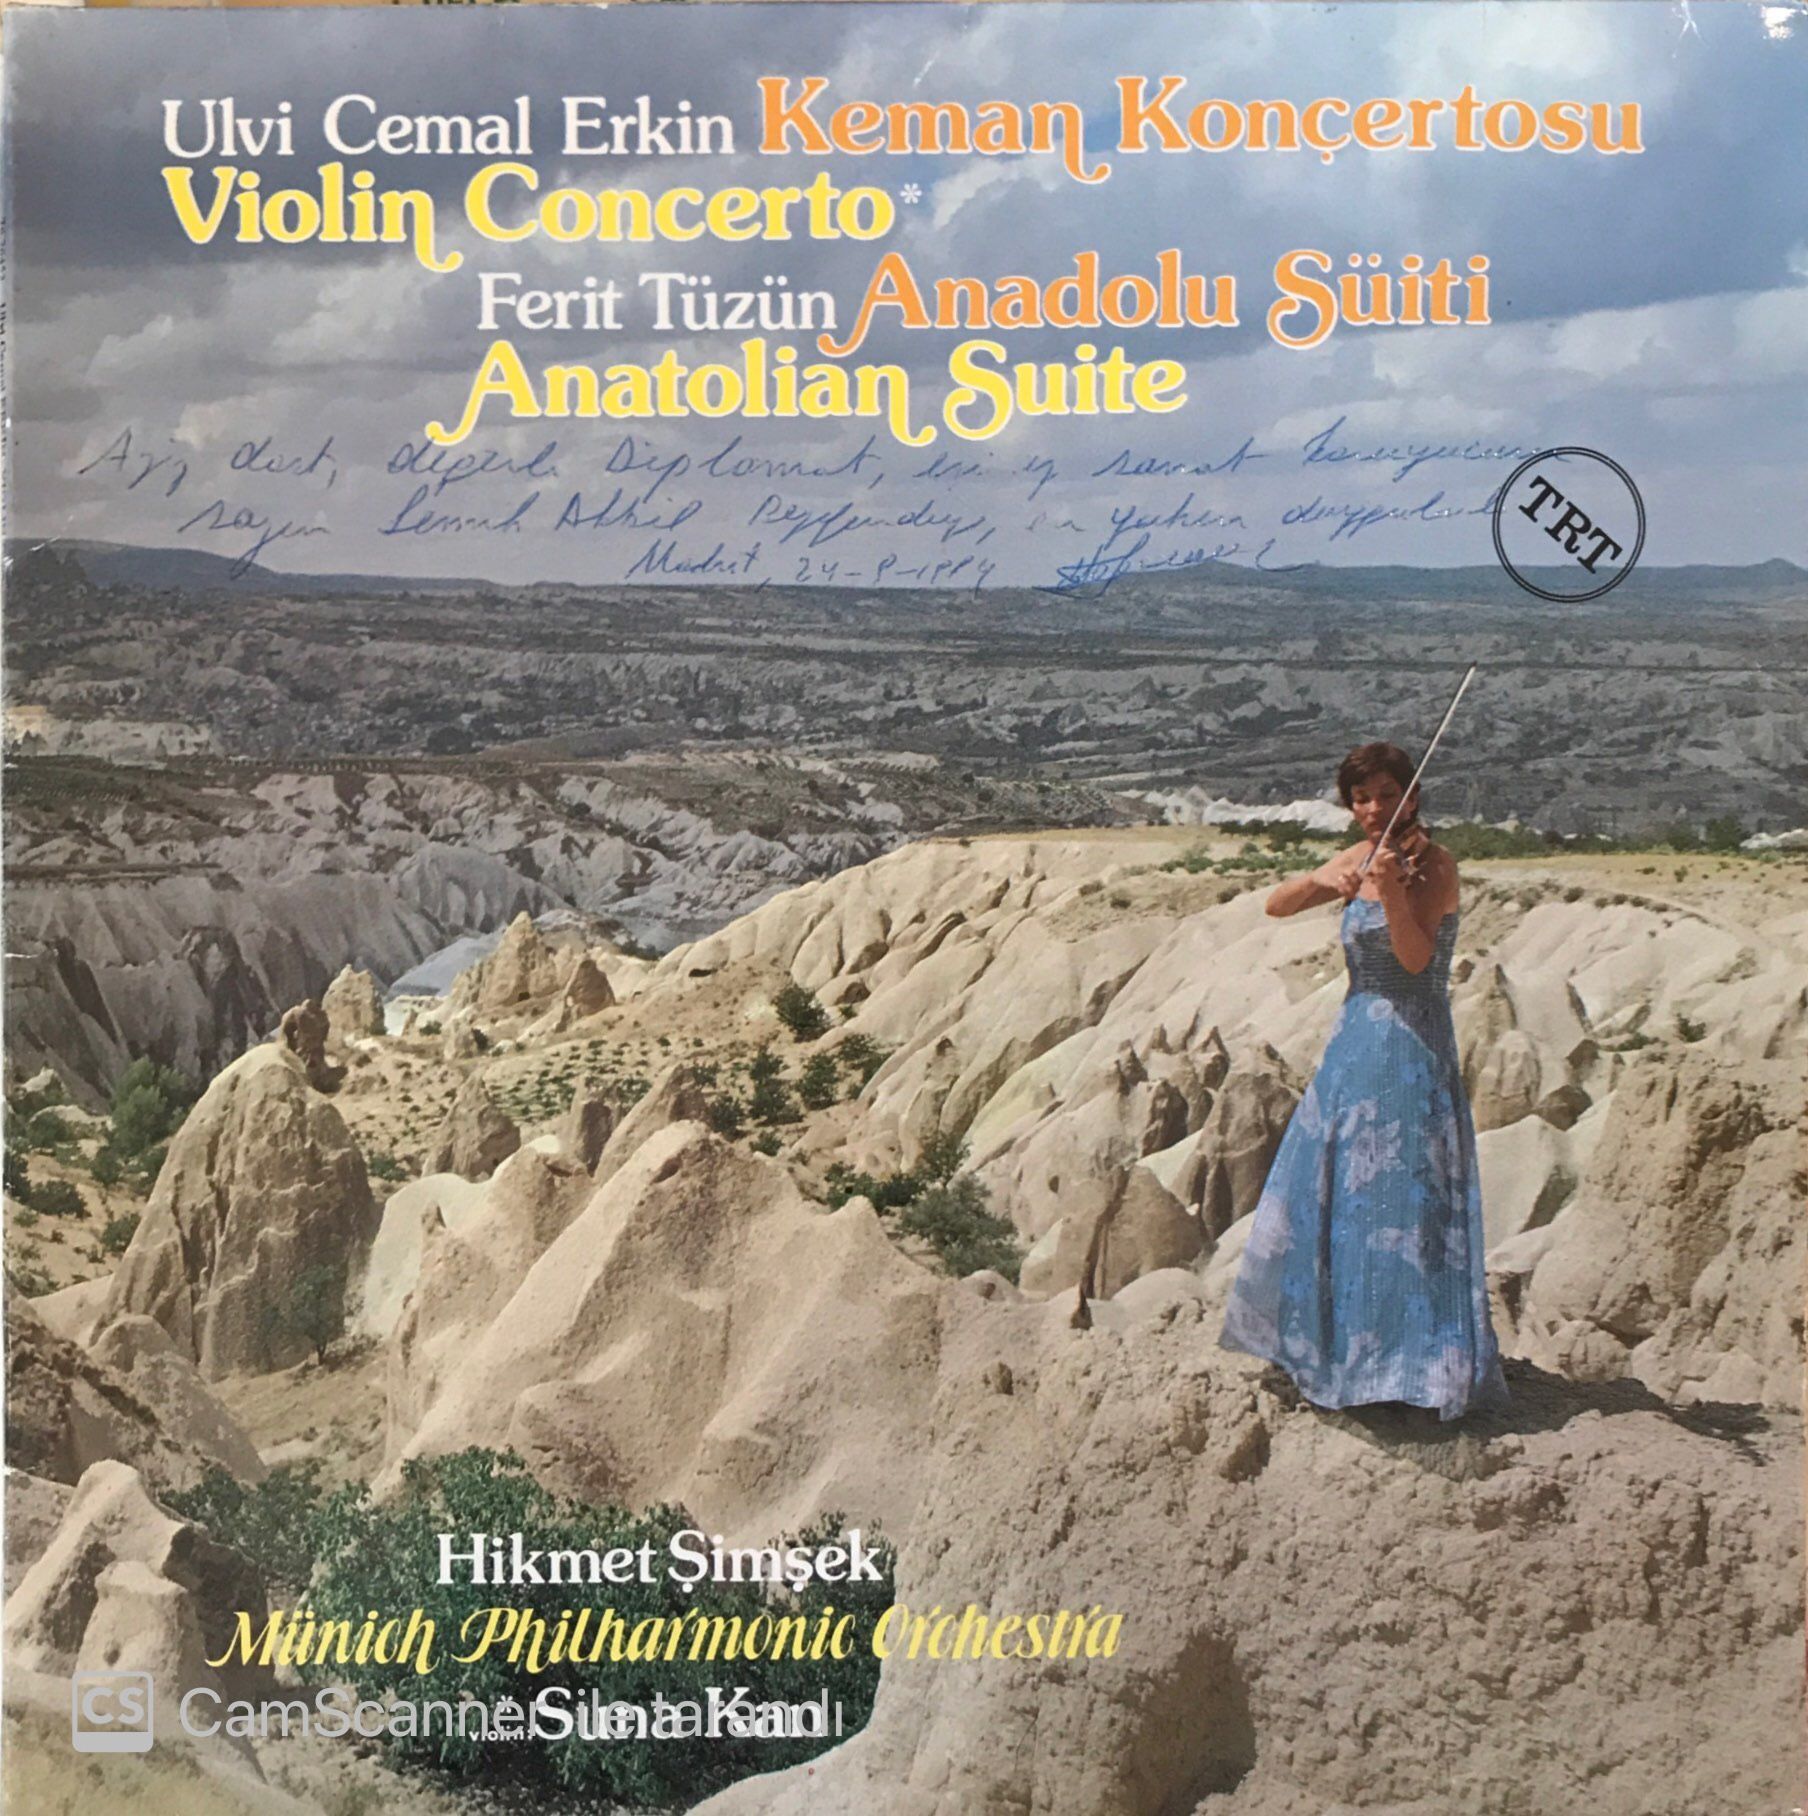 Ulvi Cemal Erkin Keman Konçertosu Violin Concerto*  Ferit Tüzün Anadolu Süiti Anatolian Suite LP